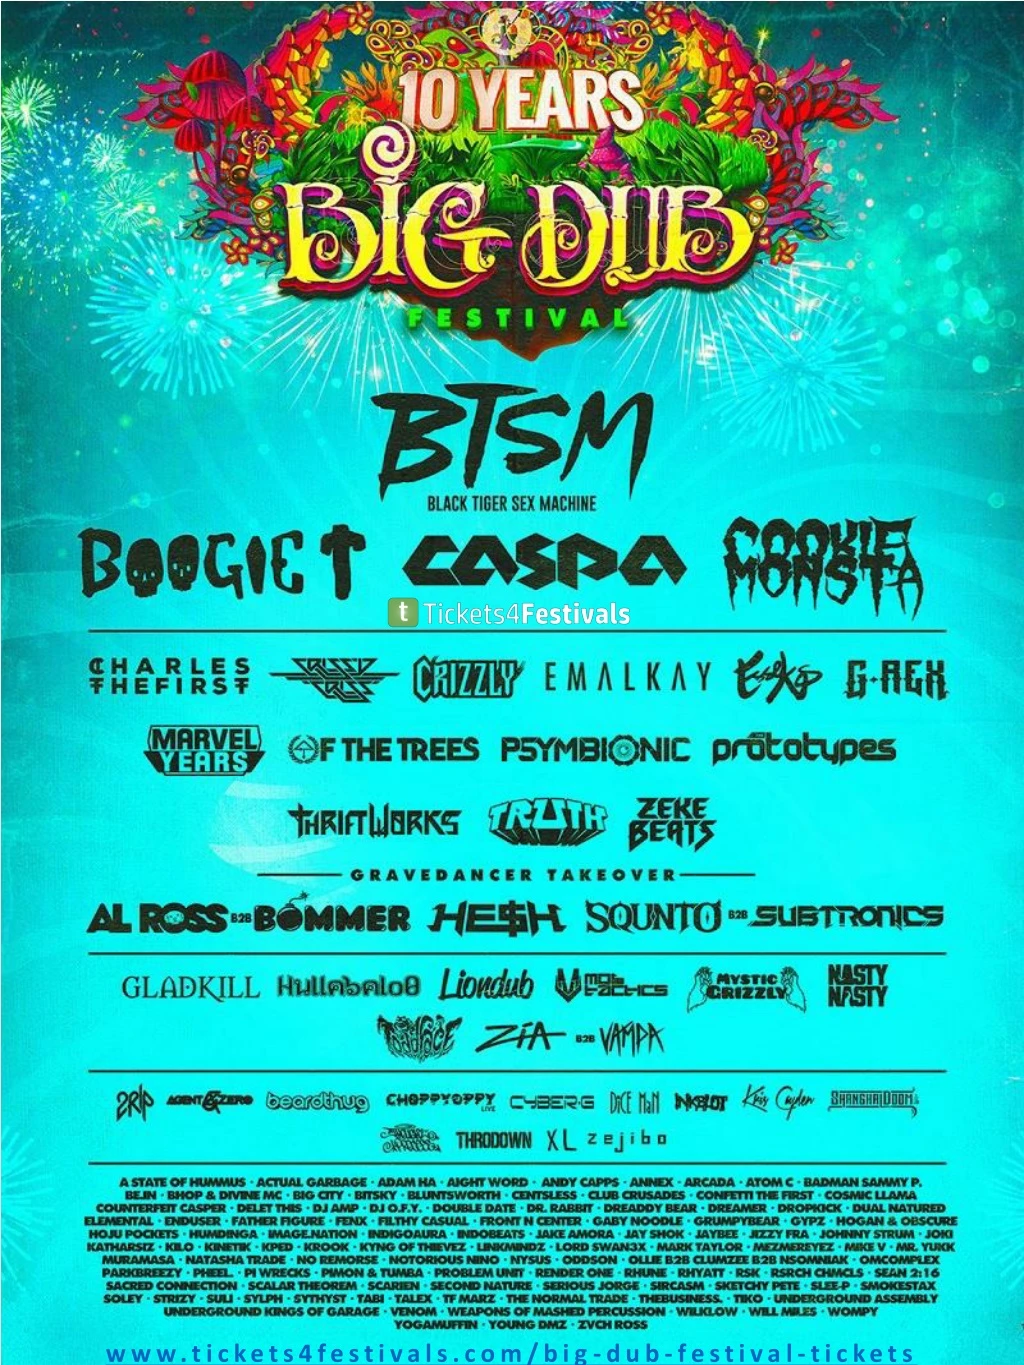 www tickets4festivals com big dub festival tickets